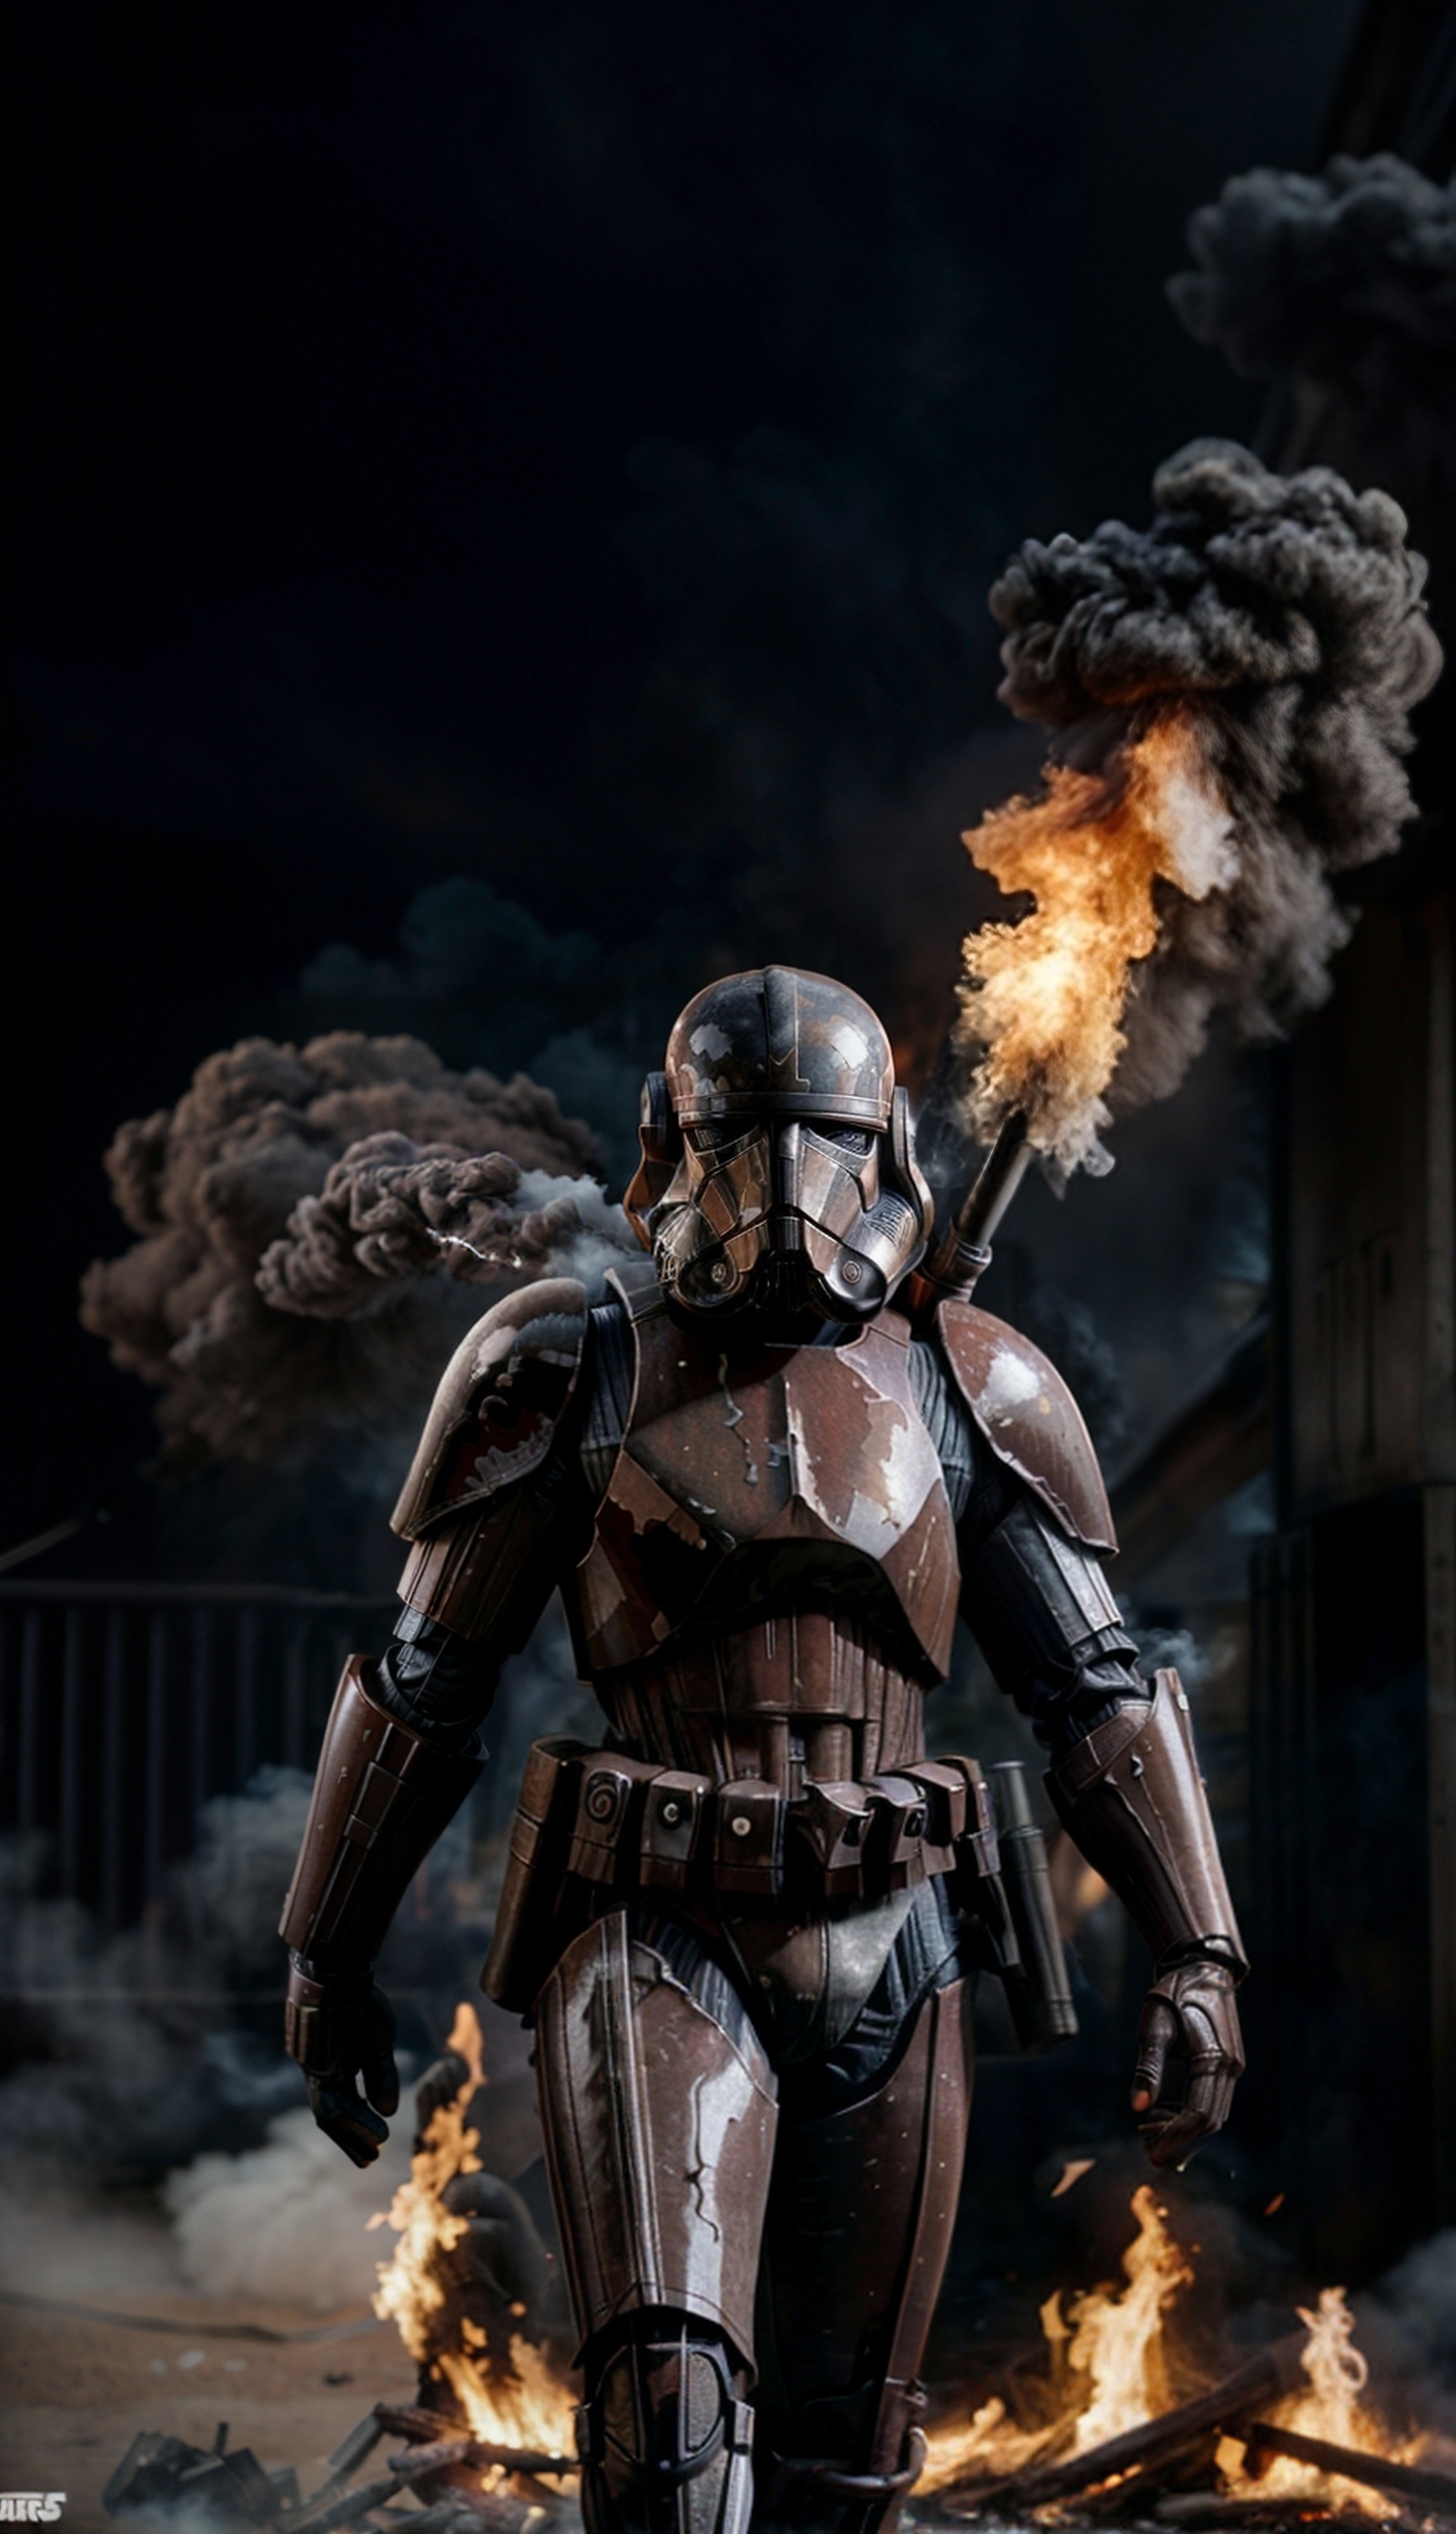 Star wars Deathtrooper image by Diroverlay